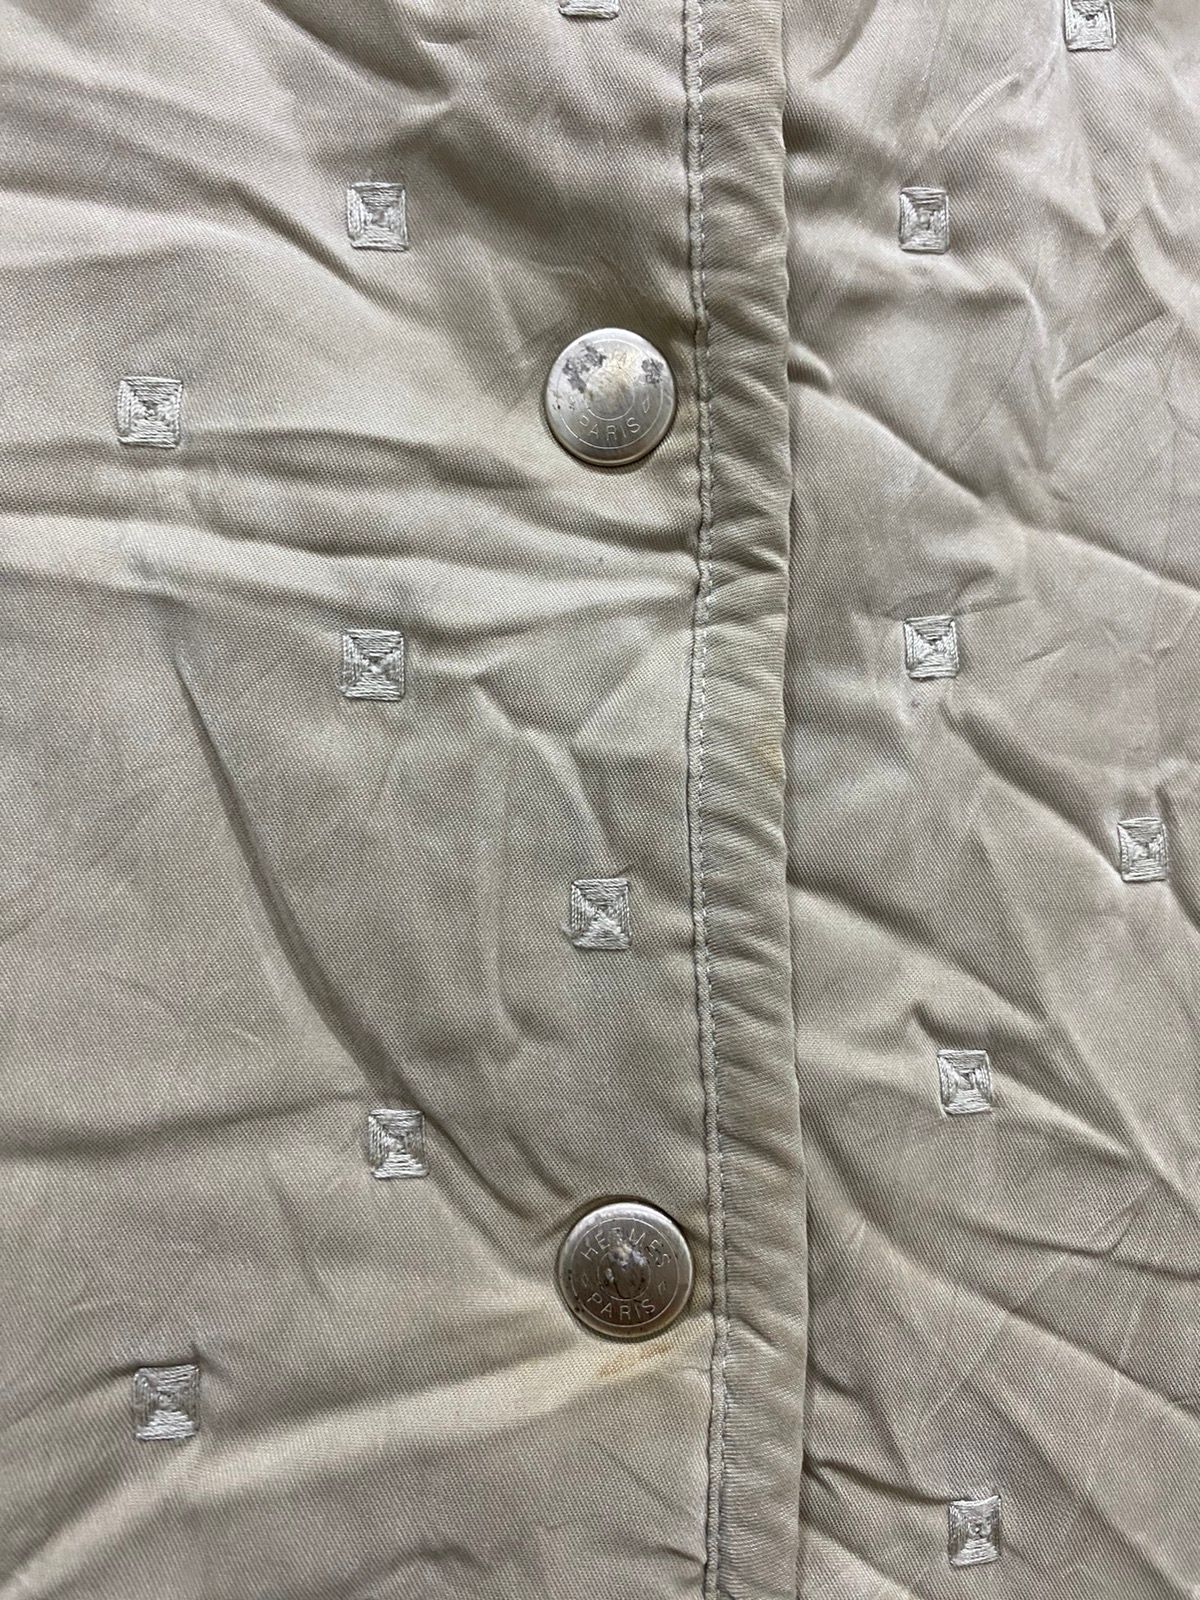 Authentic Hermès Jacket Beige Quilted France 42 Coat - 3